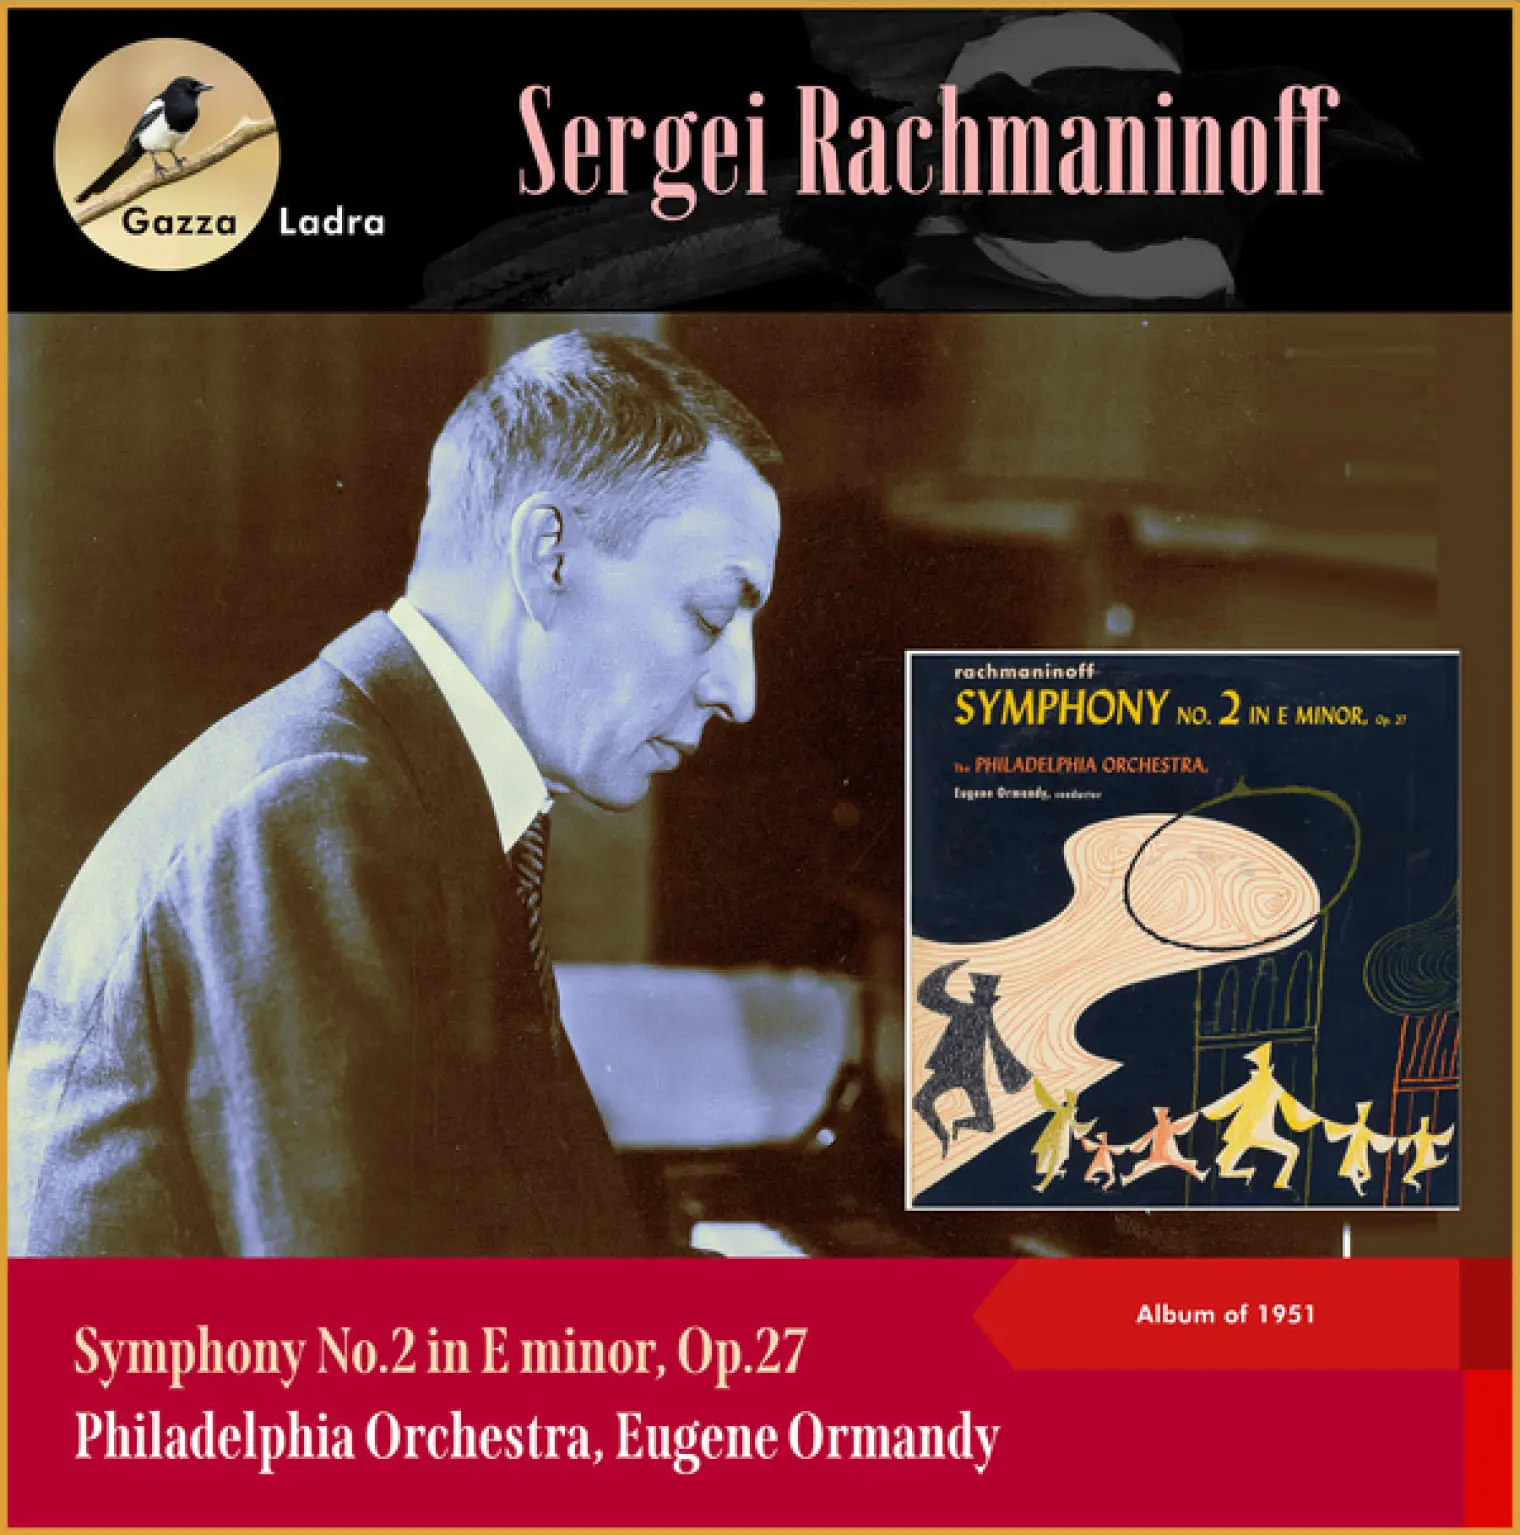 Sergei Rachmaninoff: Symphony No.2 in E minor, Op.27 (Album of 1951) -  Philadelphia Orchestra 